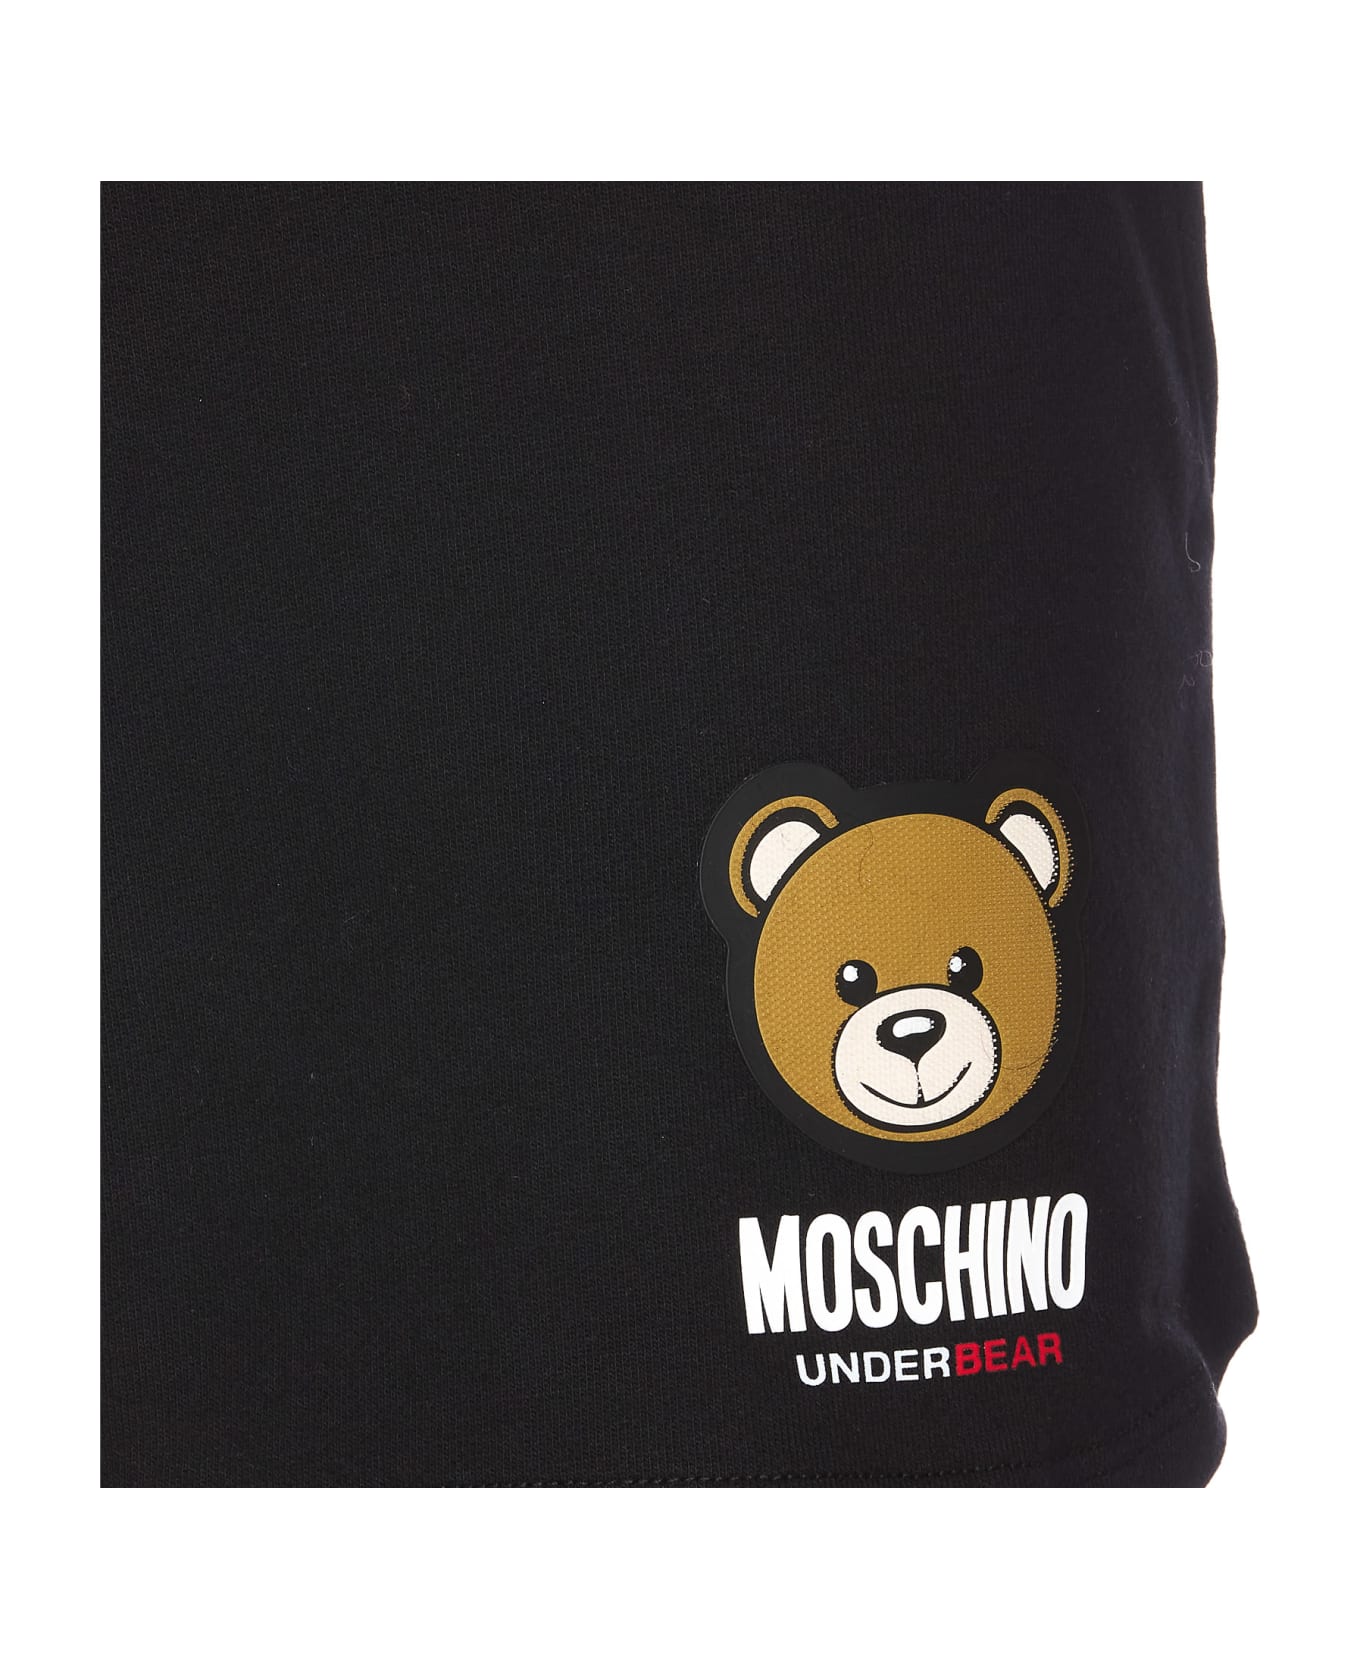 Moschino Underbear Shorts - Black ショートパンツ